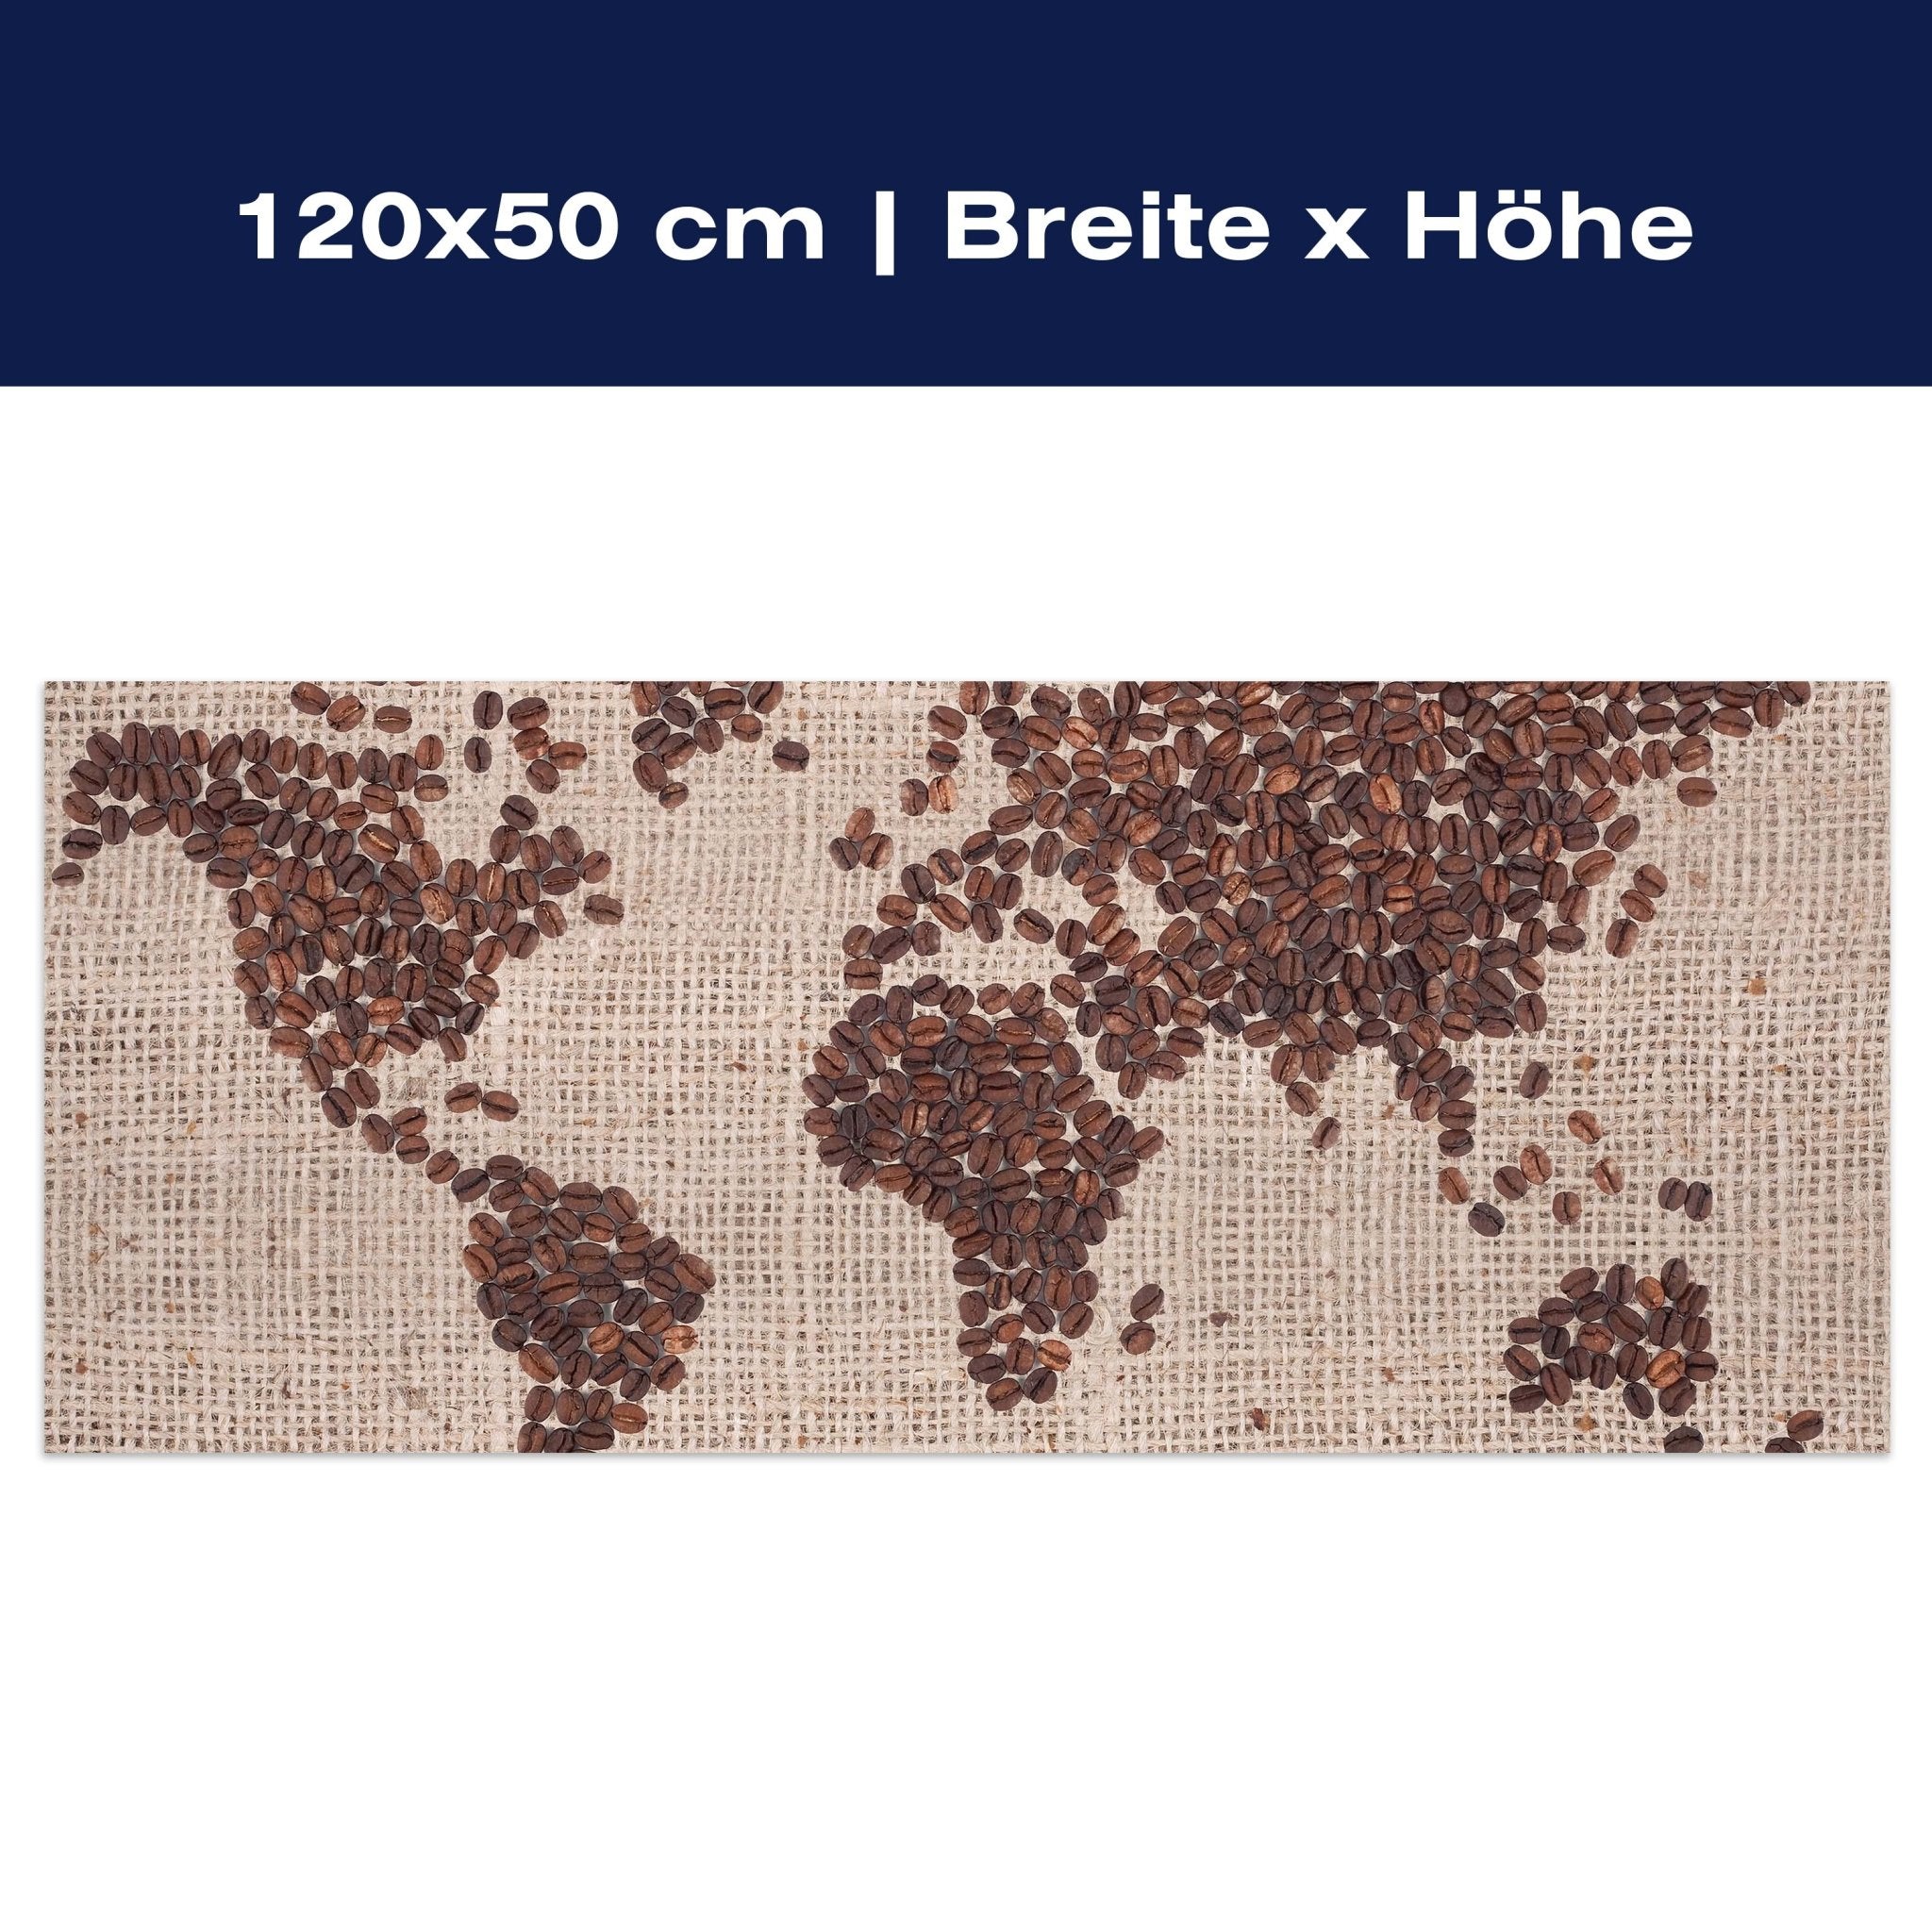 Leinwandbild Weltkarte Kaffee M0012